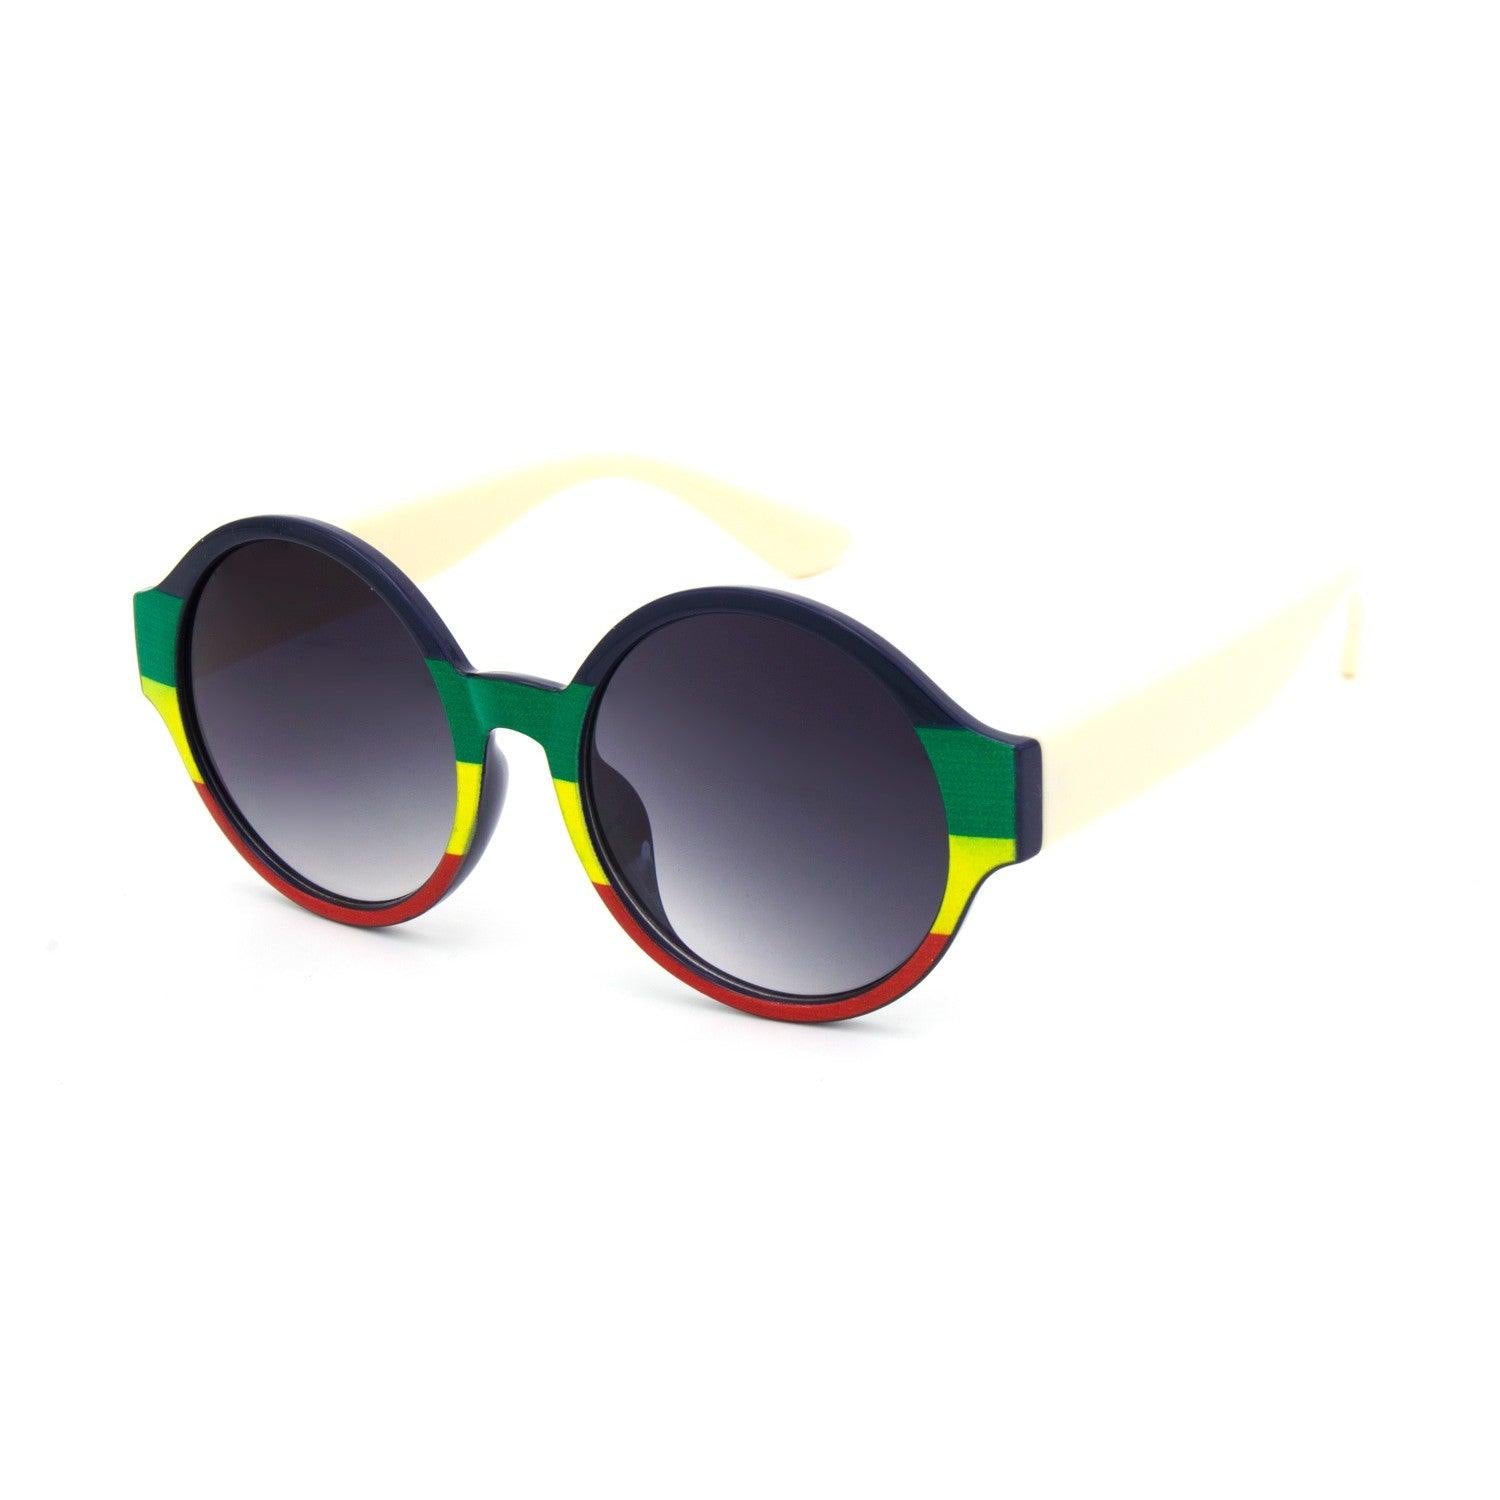 "Fall Classy" Round Plastic Sunglasses - Weekend Shade Sunglasses